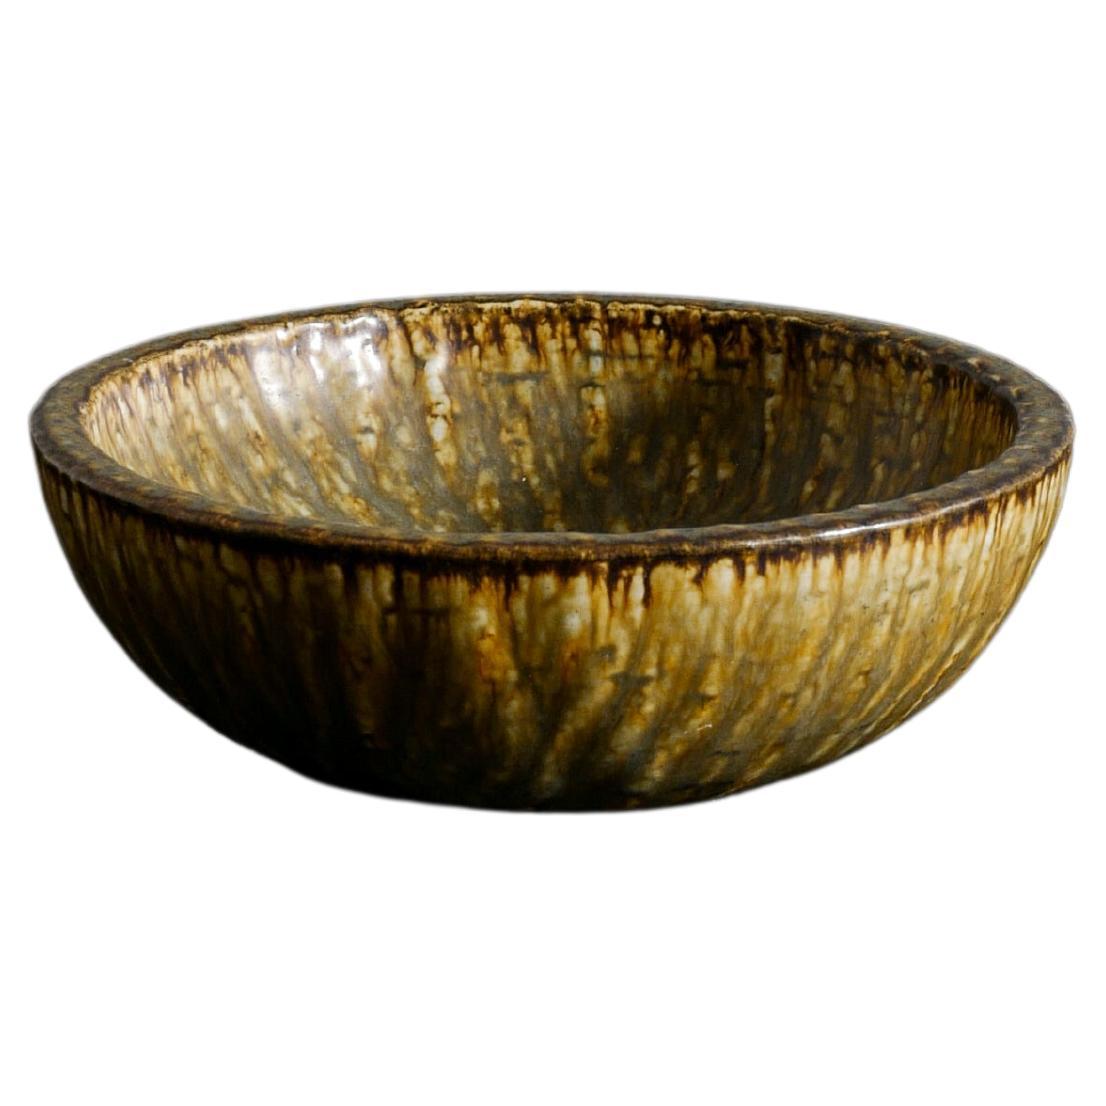 Gunnar Nylund "Rubus" Mid Century Ceramic Bowl Dish for Rörstrand Sweden, 1950s